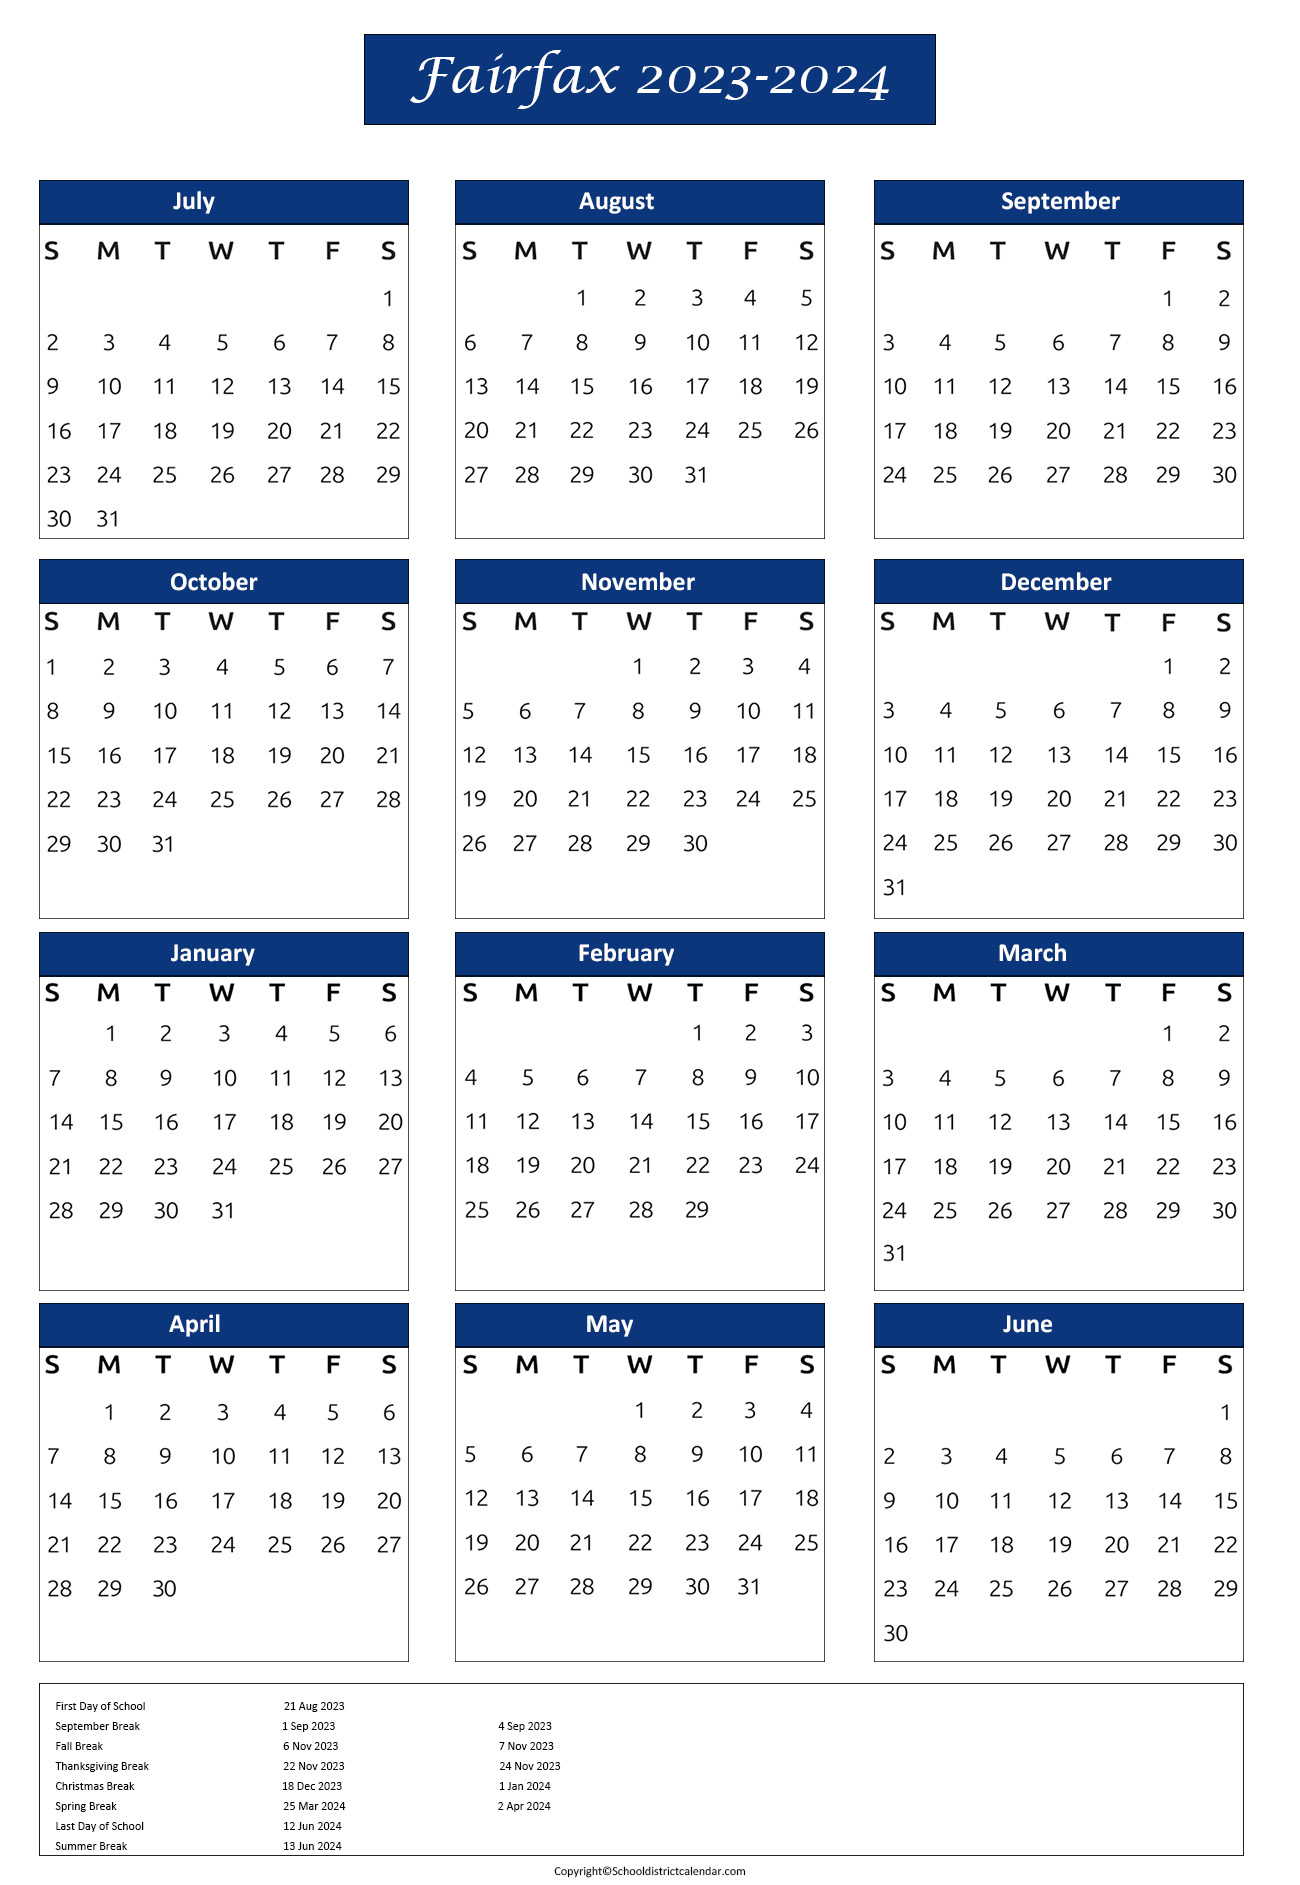 Fairfax County Public Schools Calendar Holidays 20232024